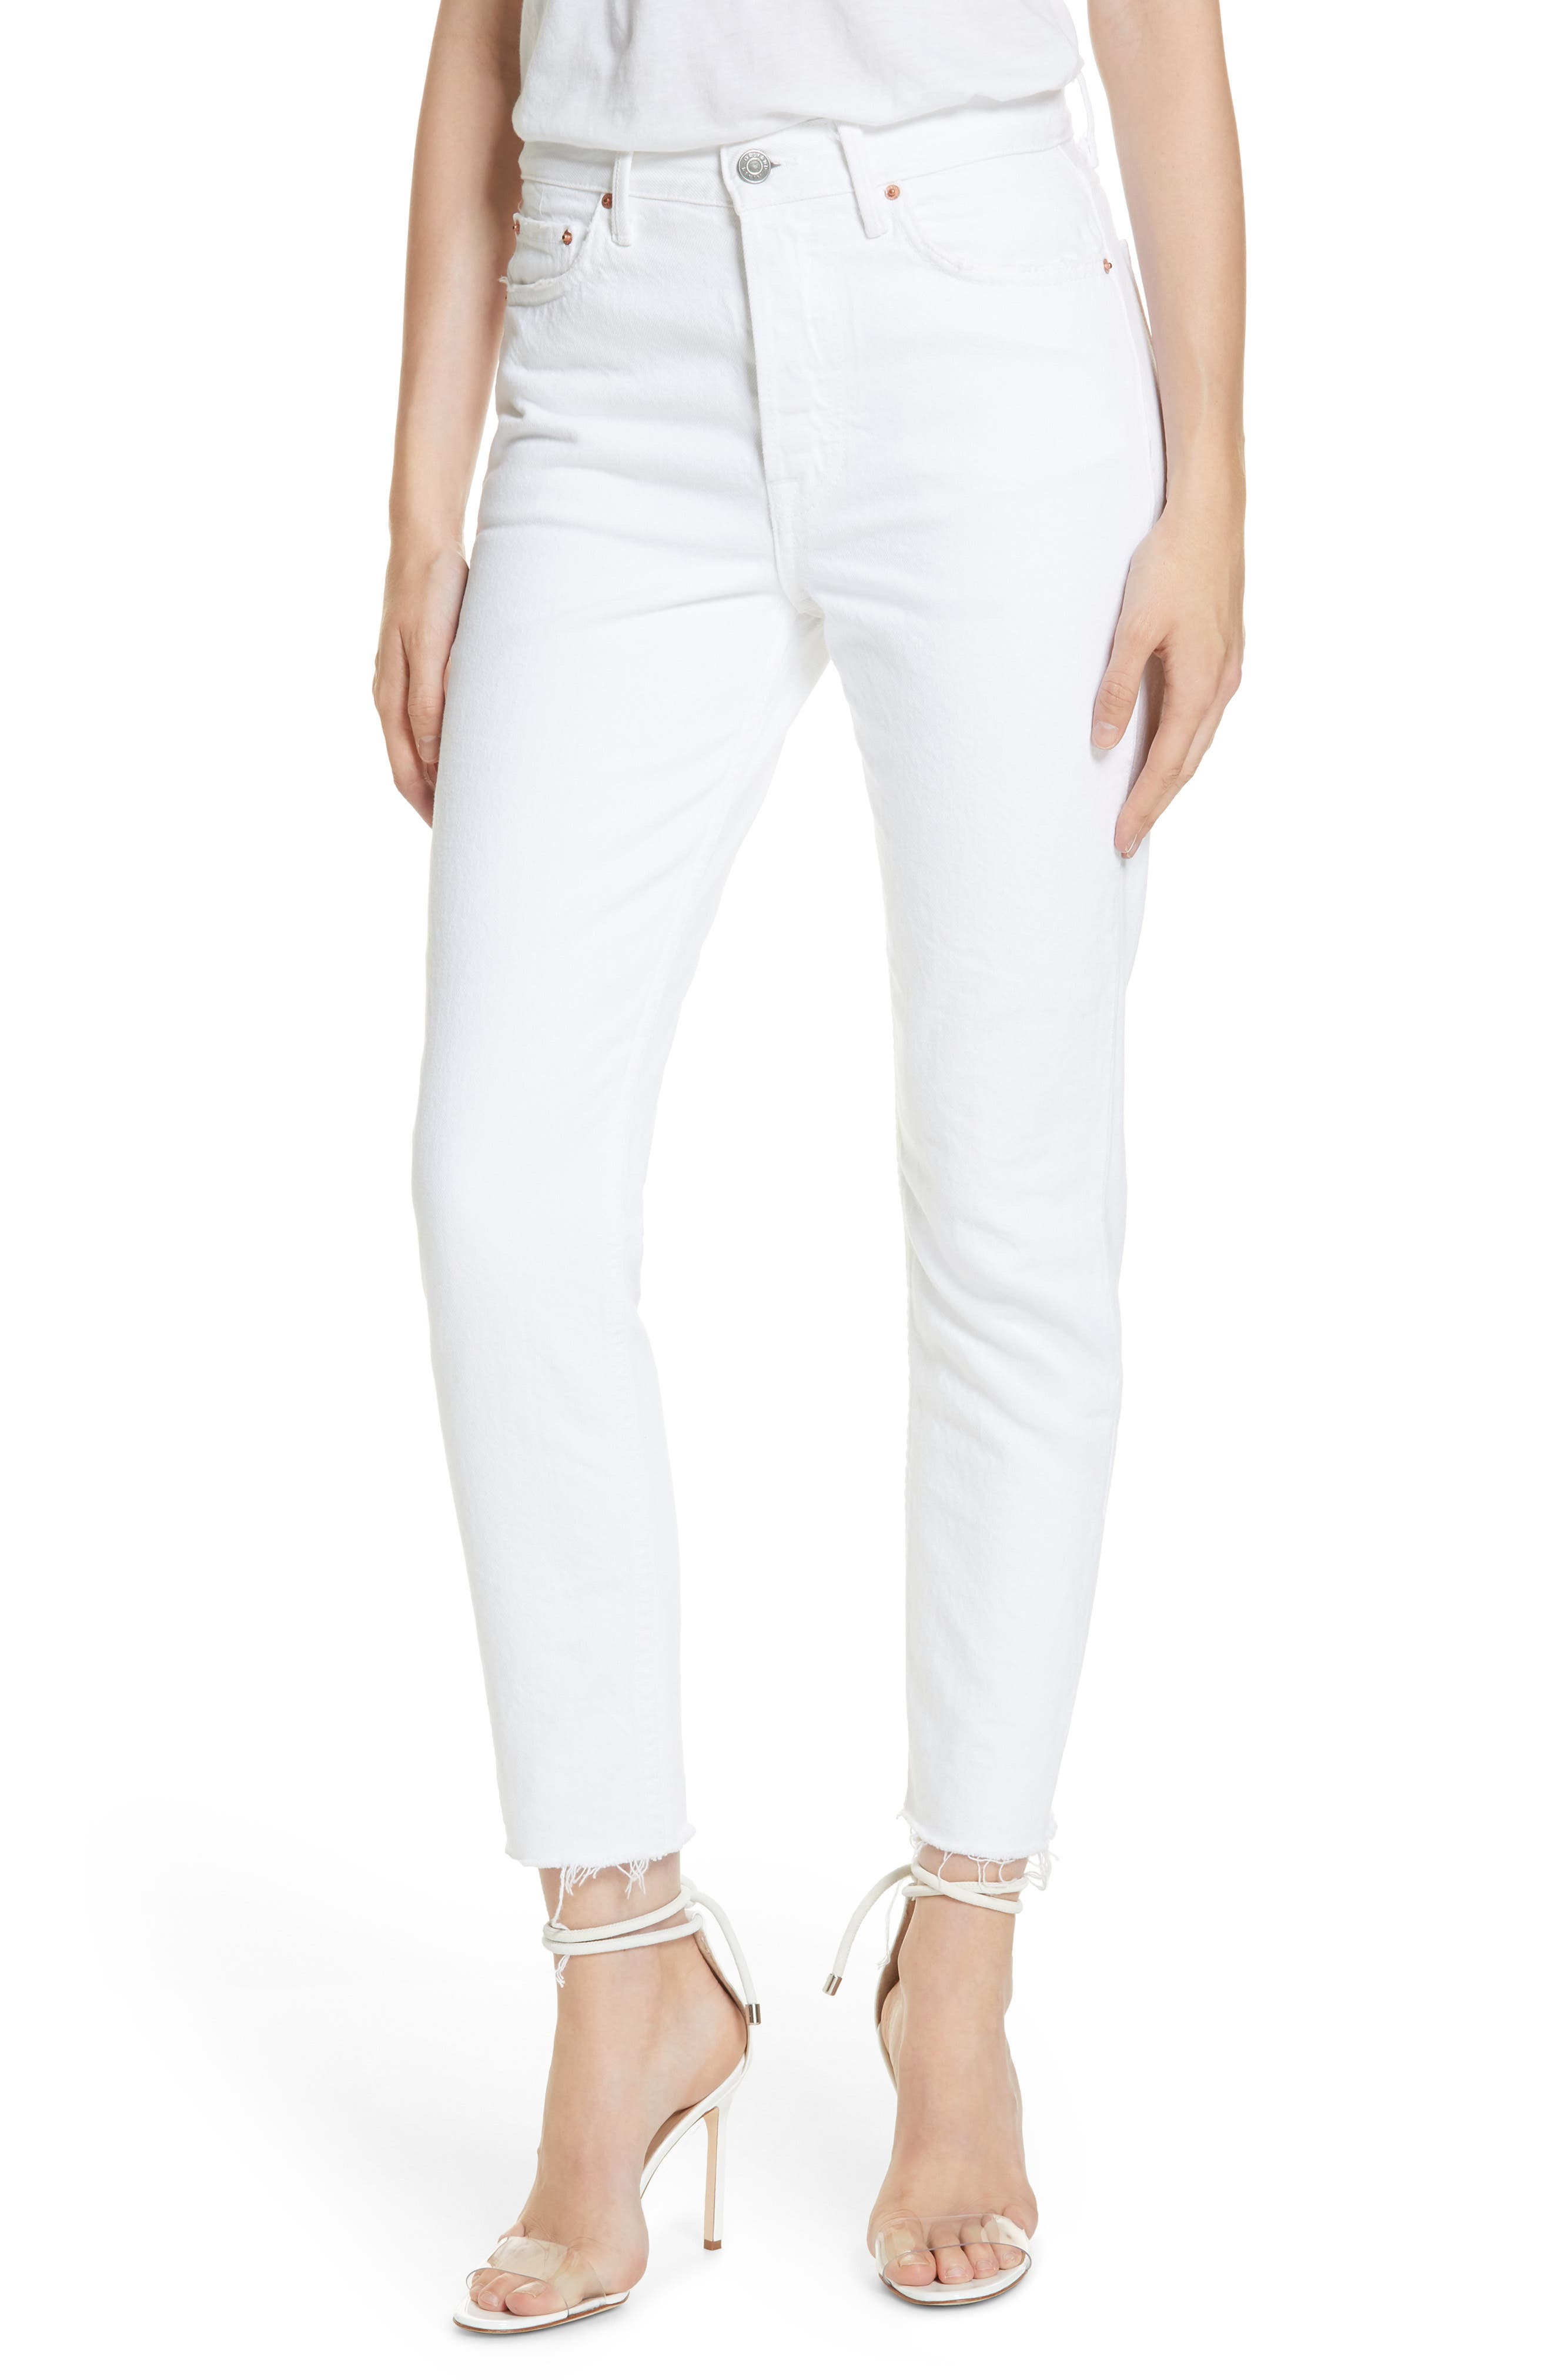 grlfrnd white jeans